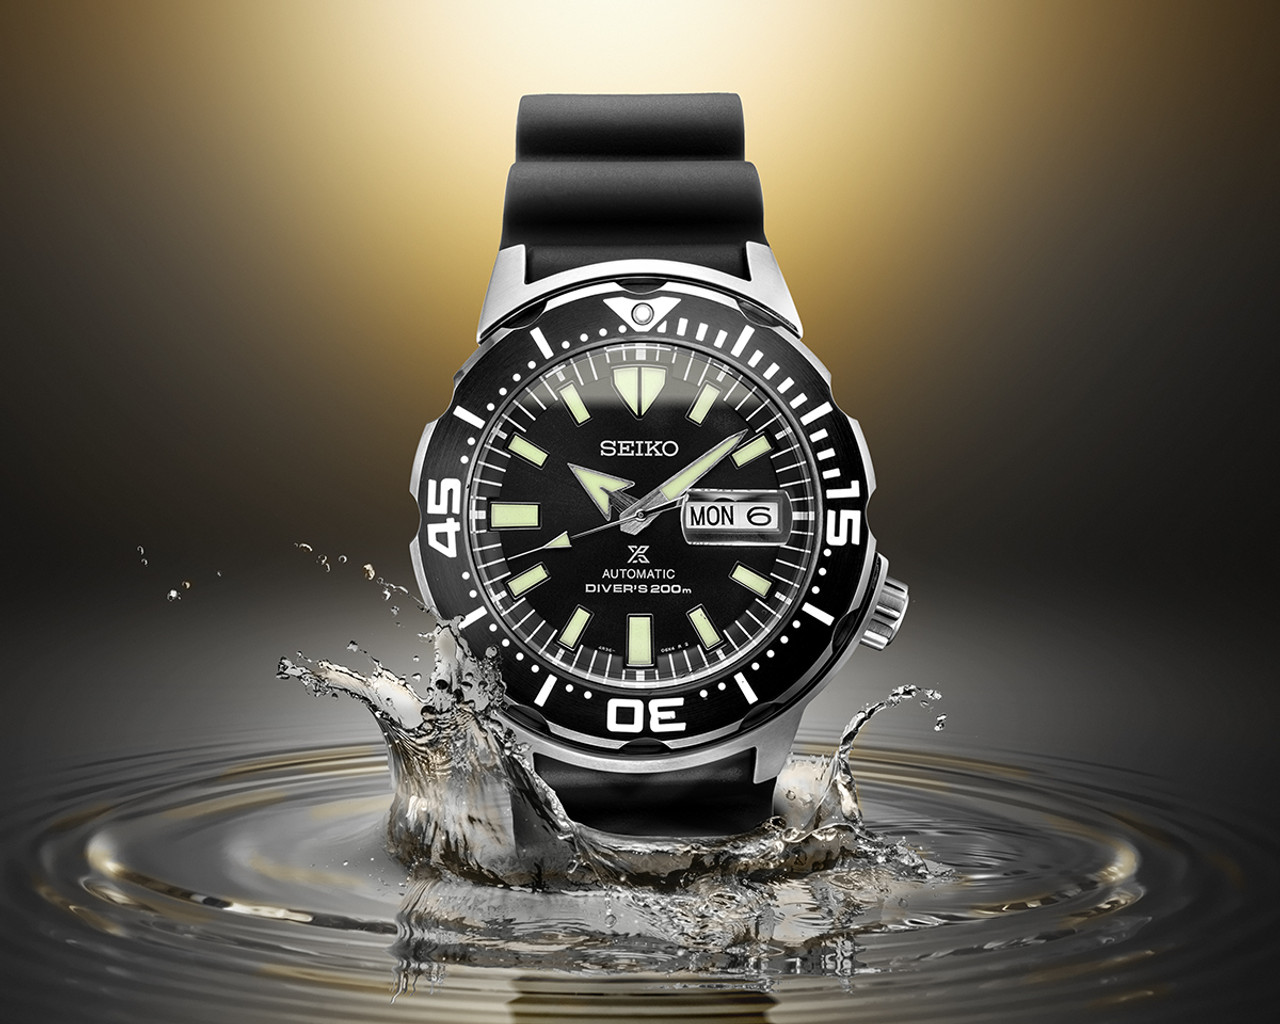 Sturmanskie Gagarin Commemorative Limited Edition Mechanical Watch